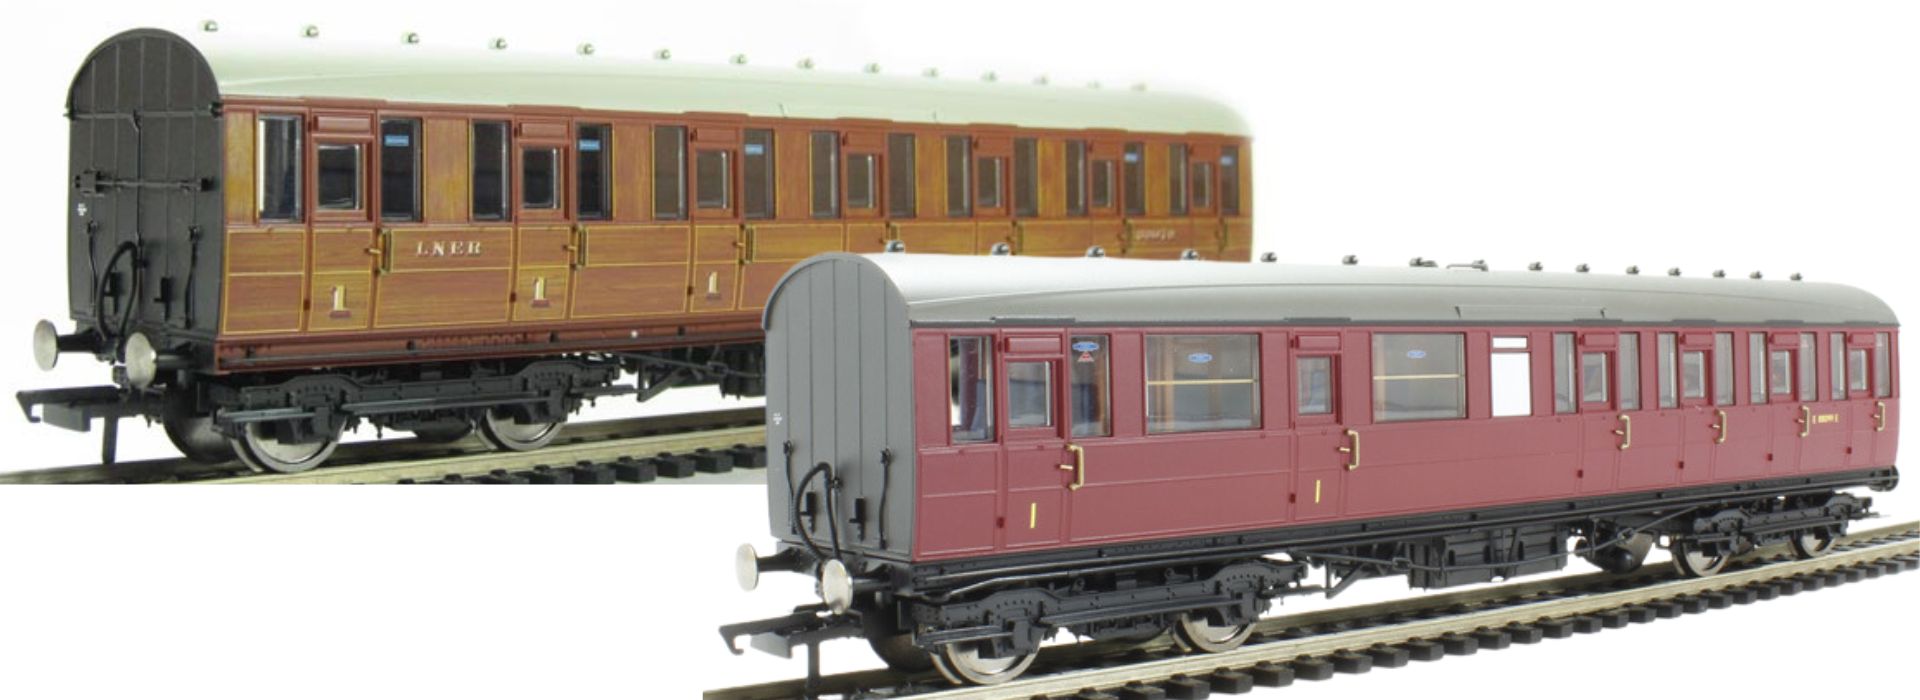 Hornby OO Gauge (1:76 Scale) LNER Gresley non-vestibuled suburban